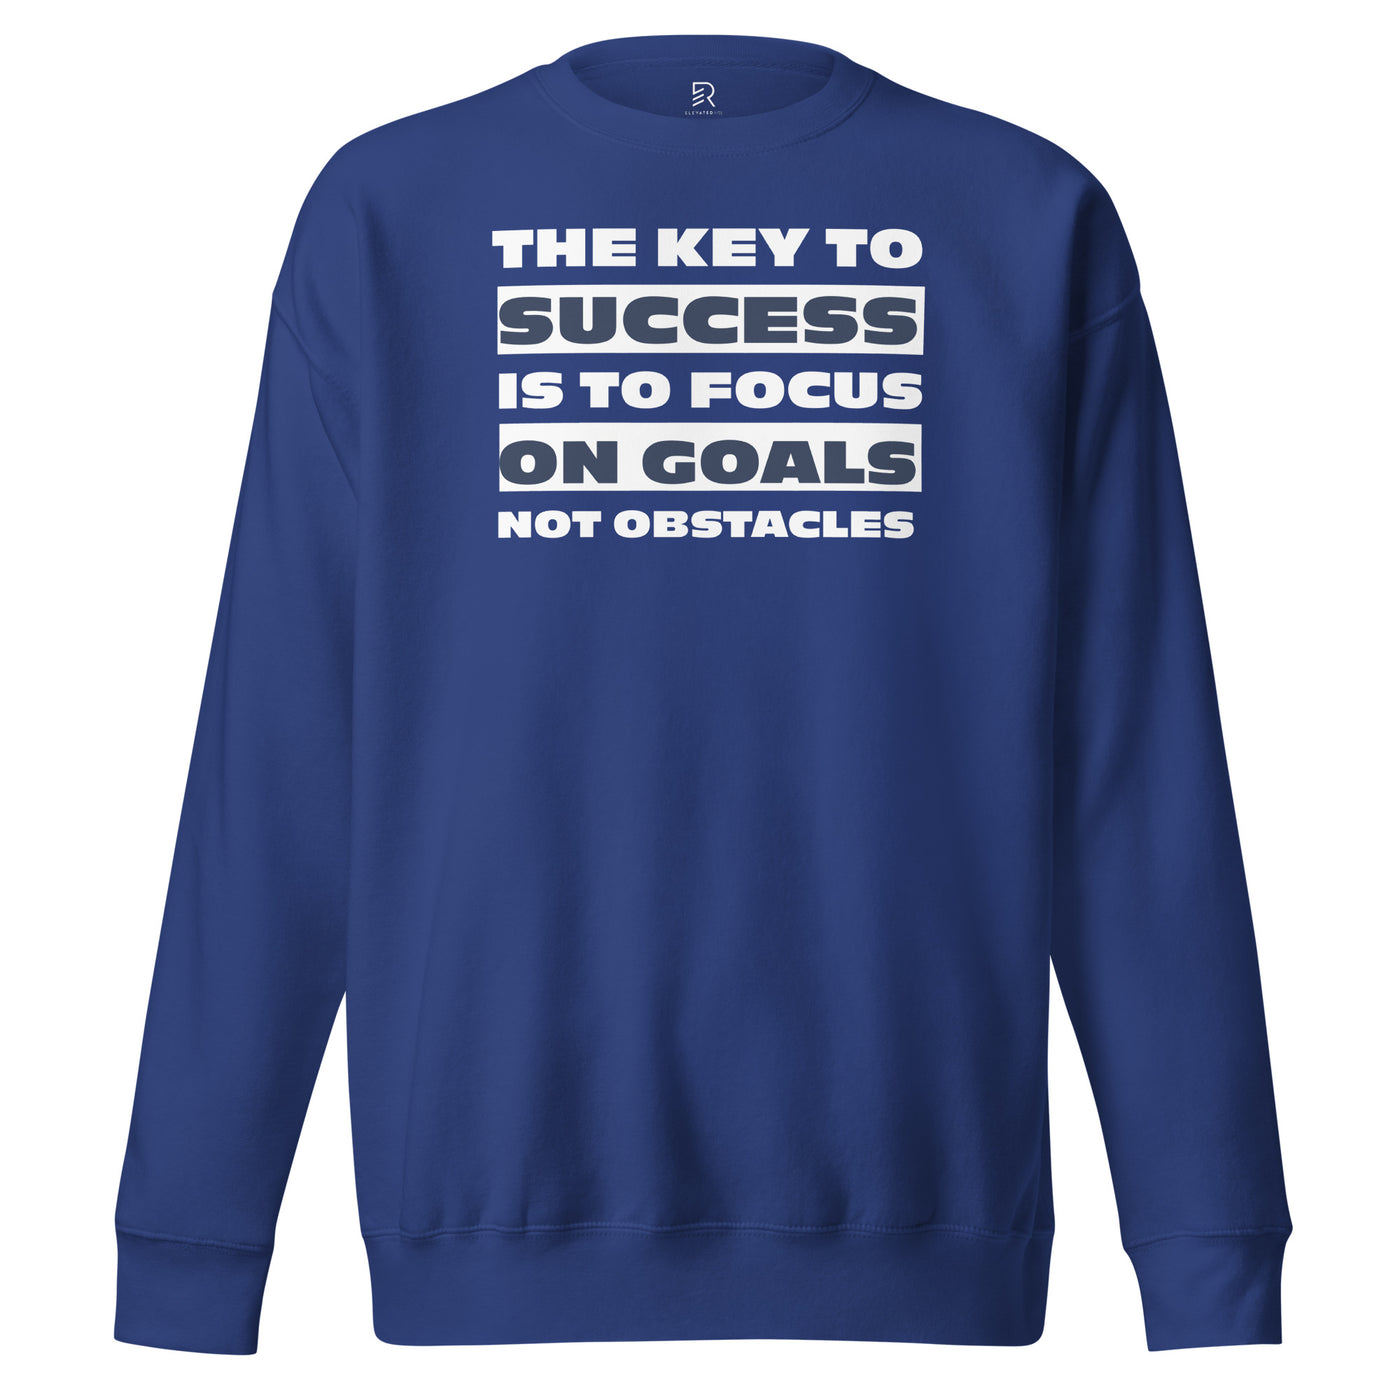 Women's Premium Royal Blue Sweatshirt - Focus on Goals